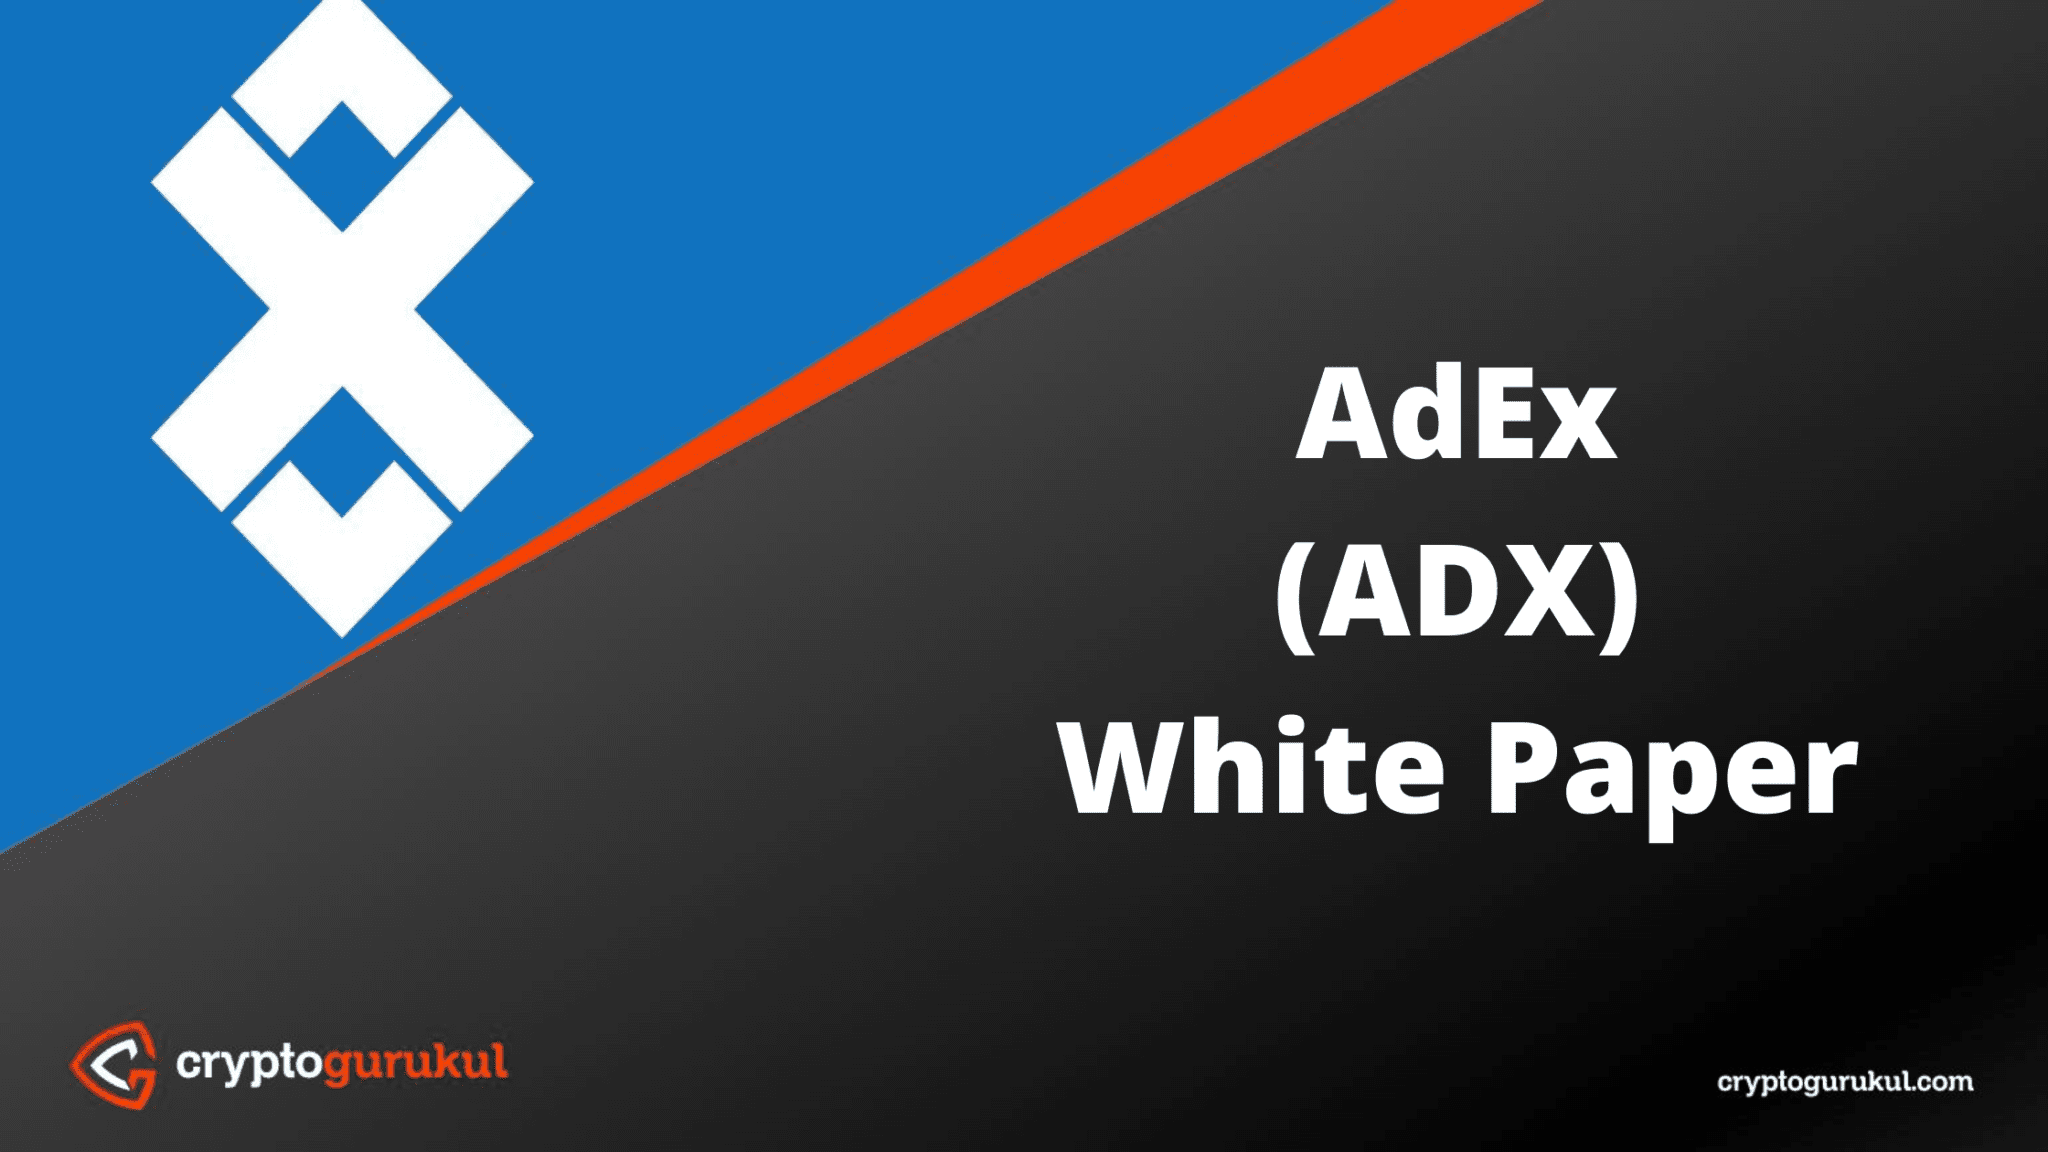 AdEx (ADX) White Paper - CryptoGurukul